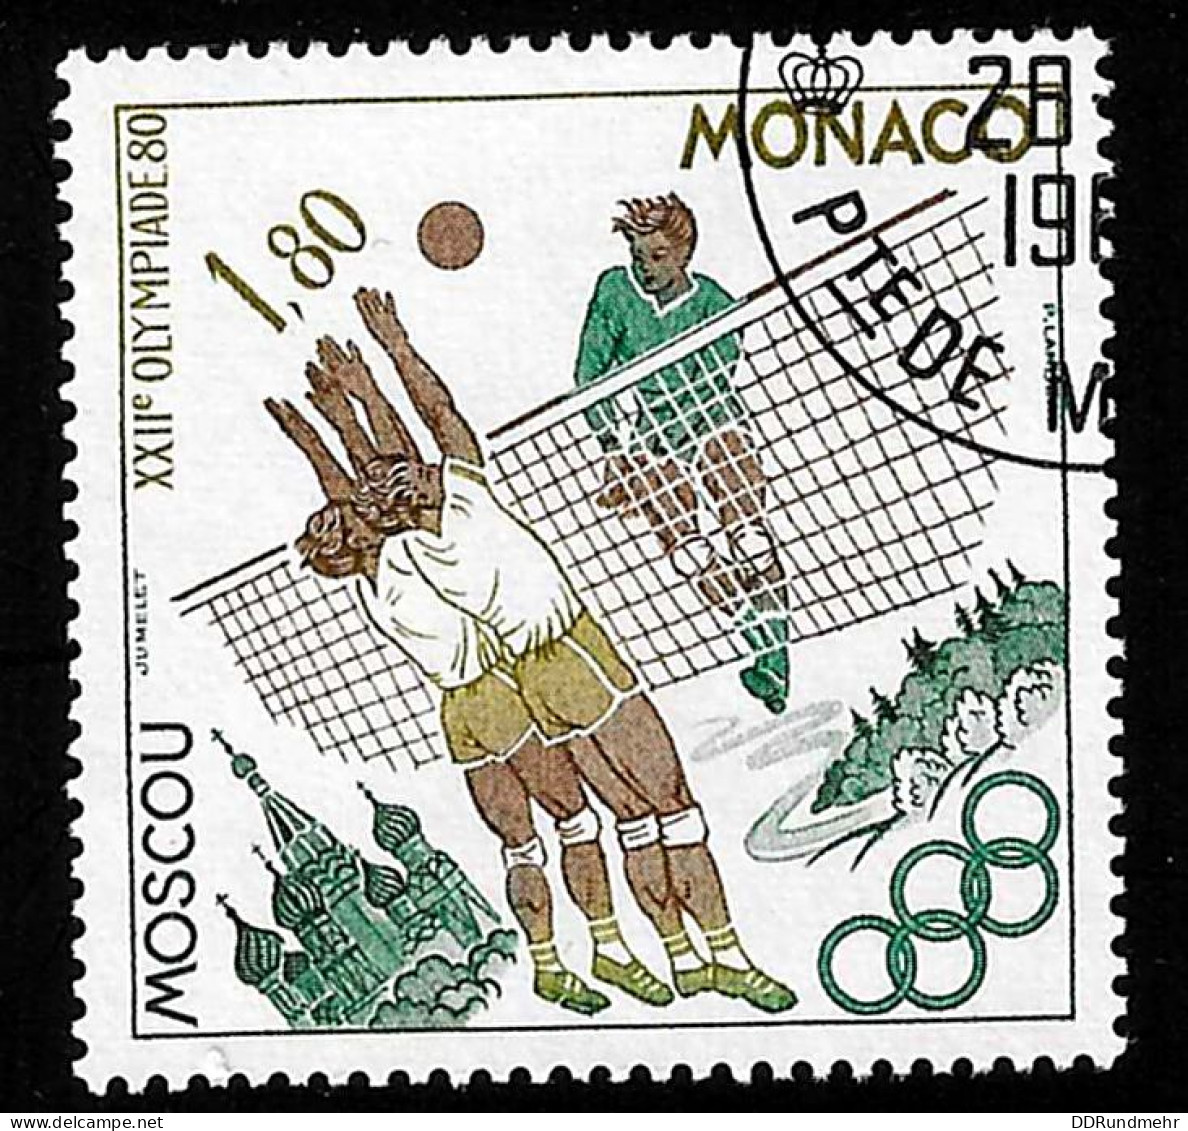 1980  Volleyball Michel MC 1418 Stamp Number MC 1224 Yvert Et Tellier MC 1221 Stanley Gibbons MC 1438 Used - Usati